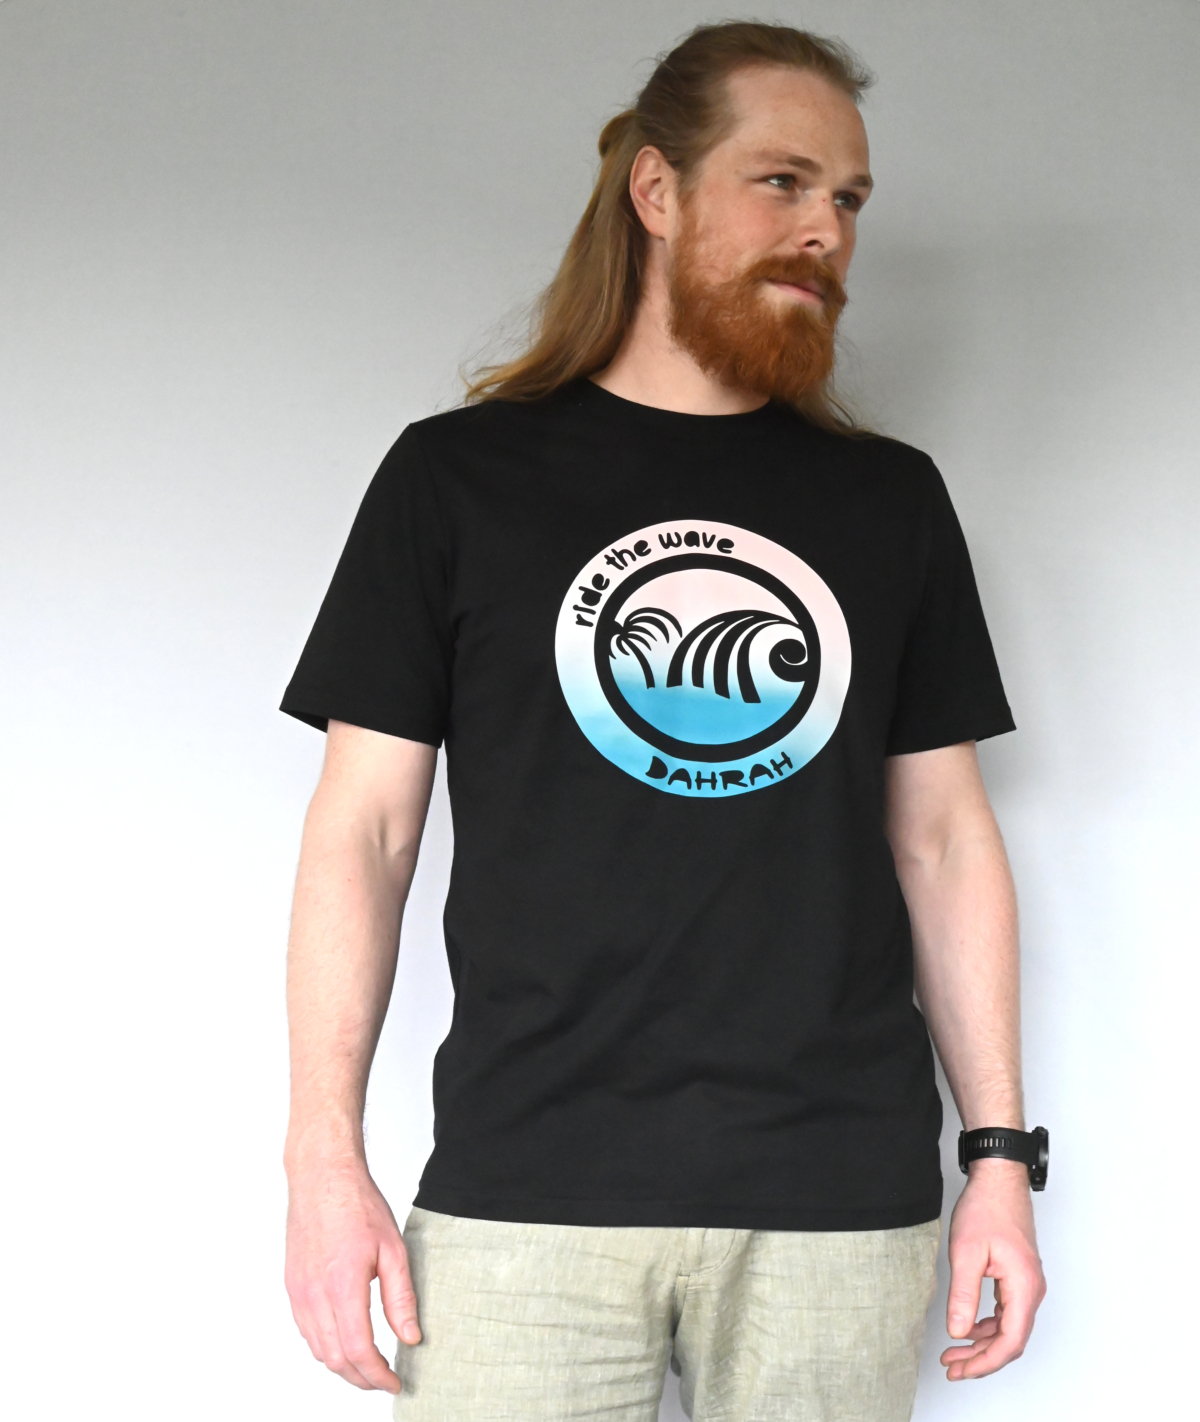 Dahrah Darah unisex organic cotton T-shirt with print of a blue wave and palm.